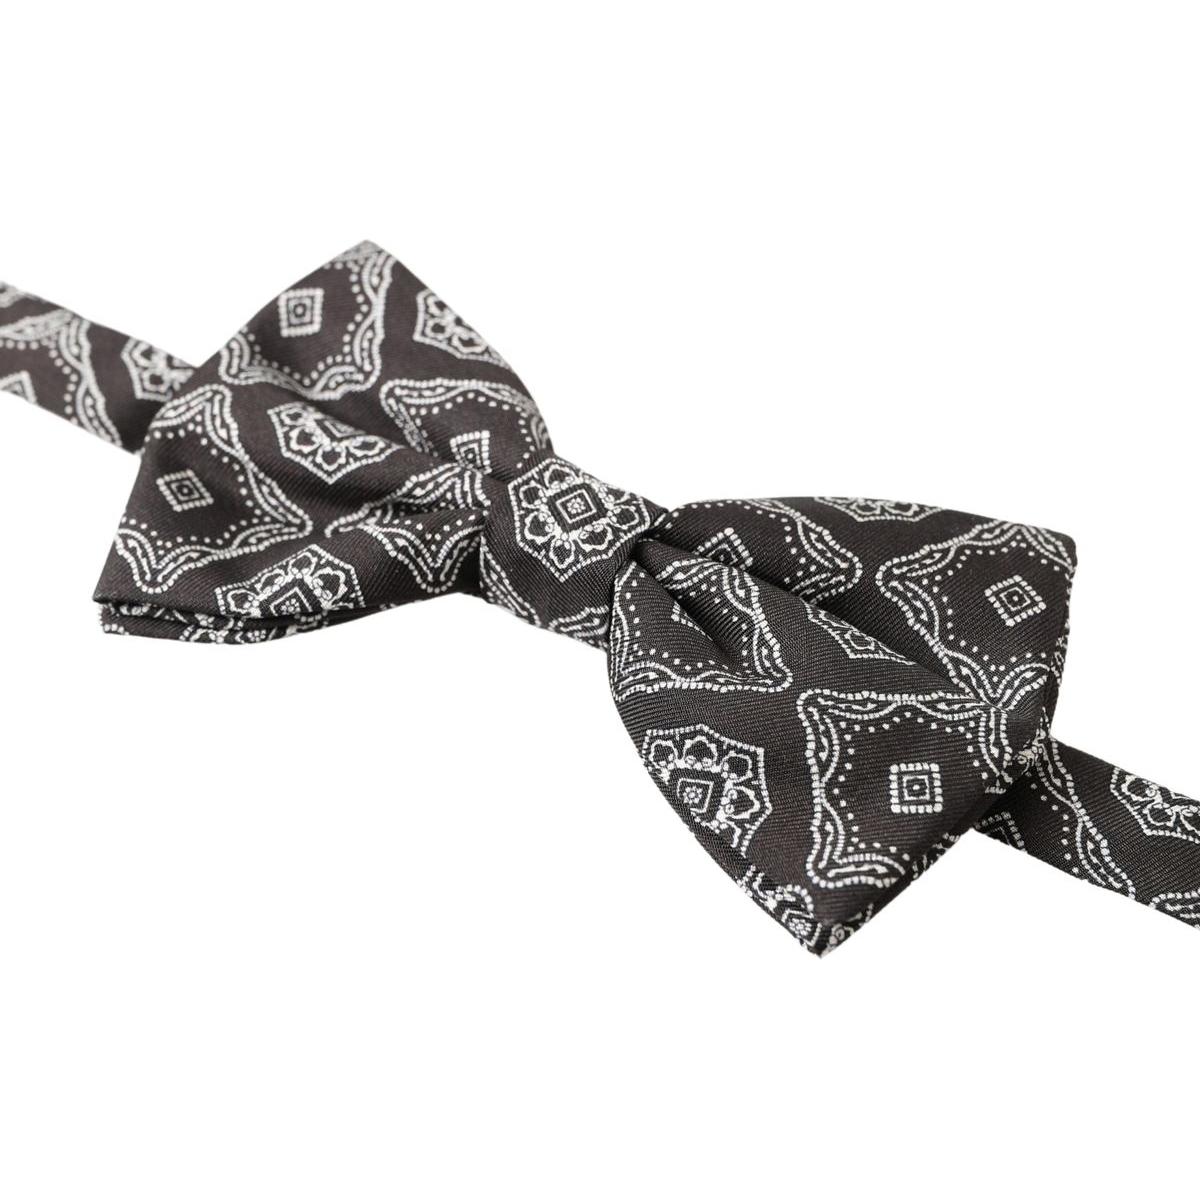 Elegant Silk Tied Bow Tie in Black & White Dolce & Gabbana